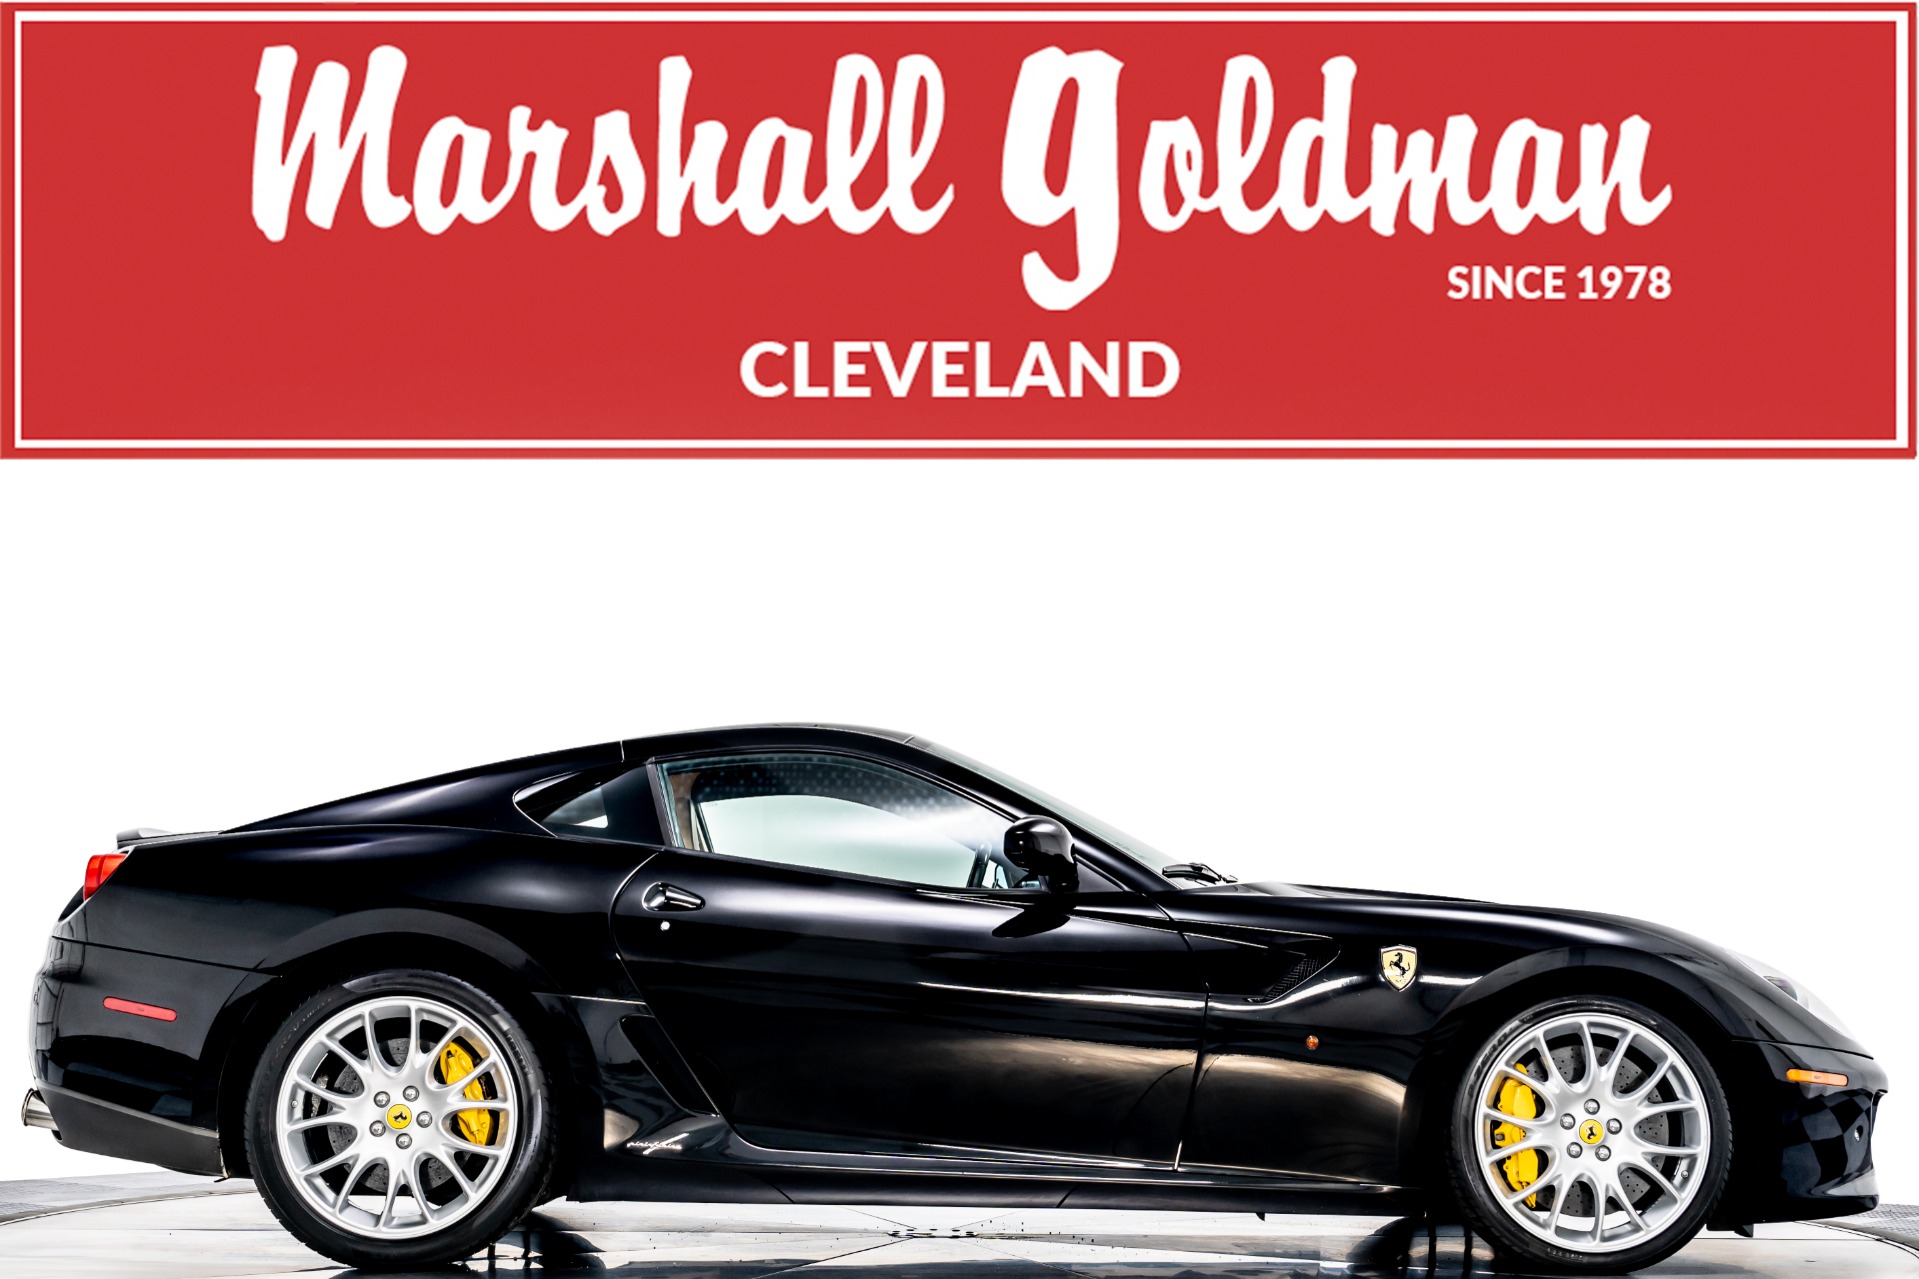 Used 2008 Ferrari 599 GTB Fiorano For Sale (Sold) | Marshall Goldman  Cleveland Stock #W21027